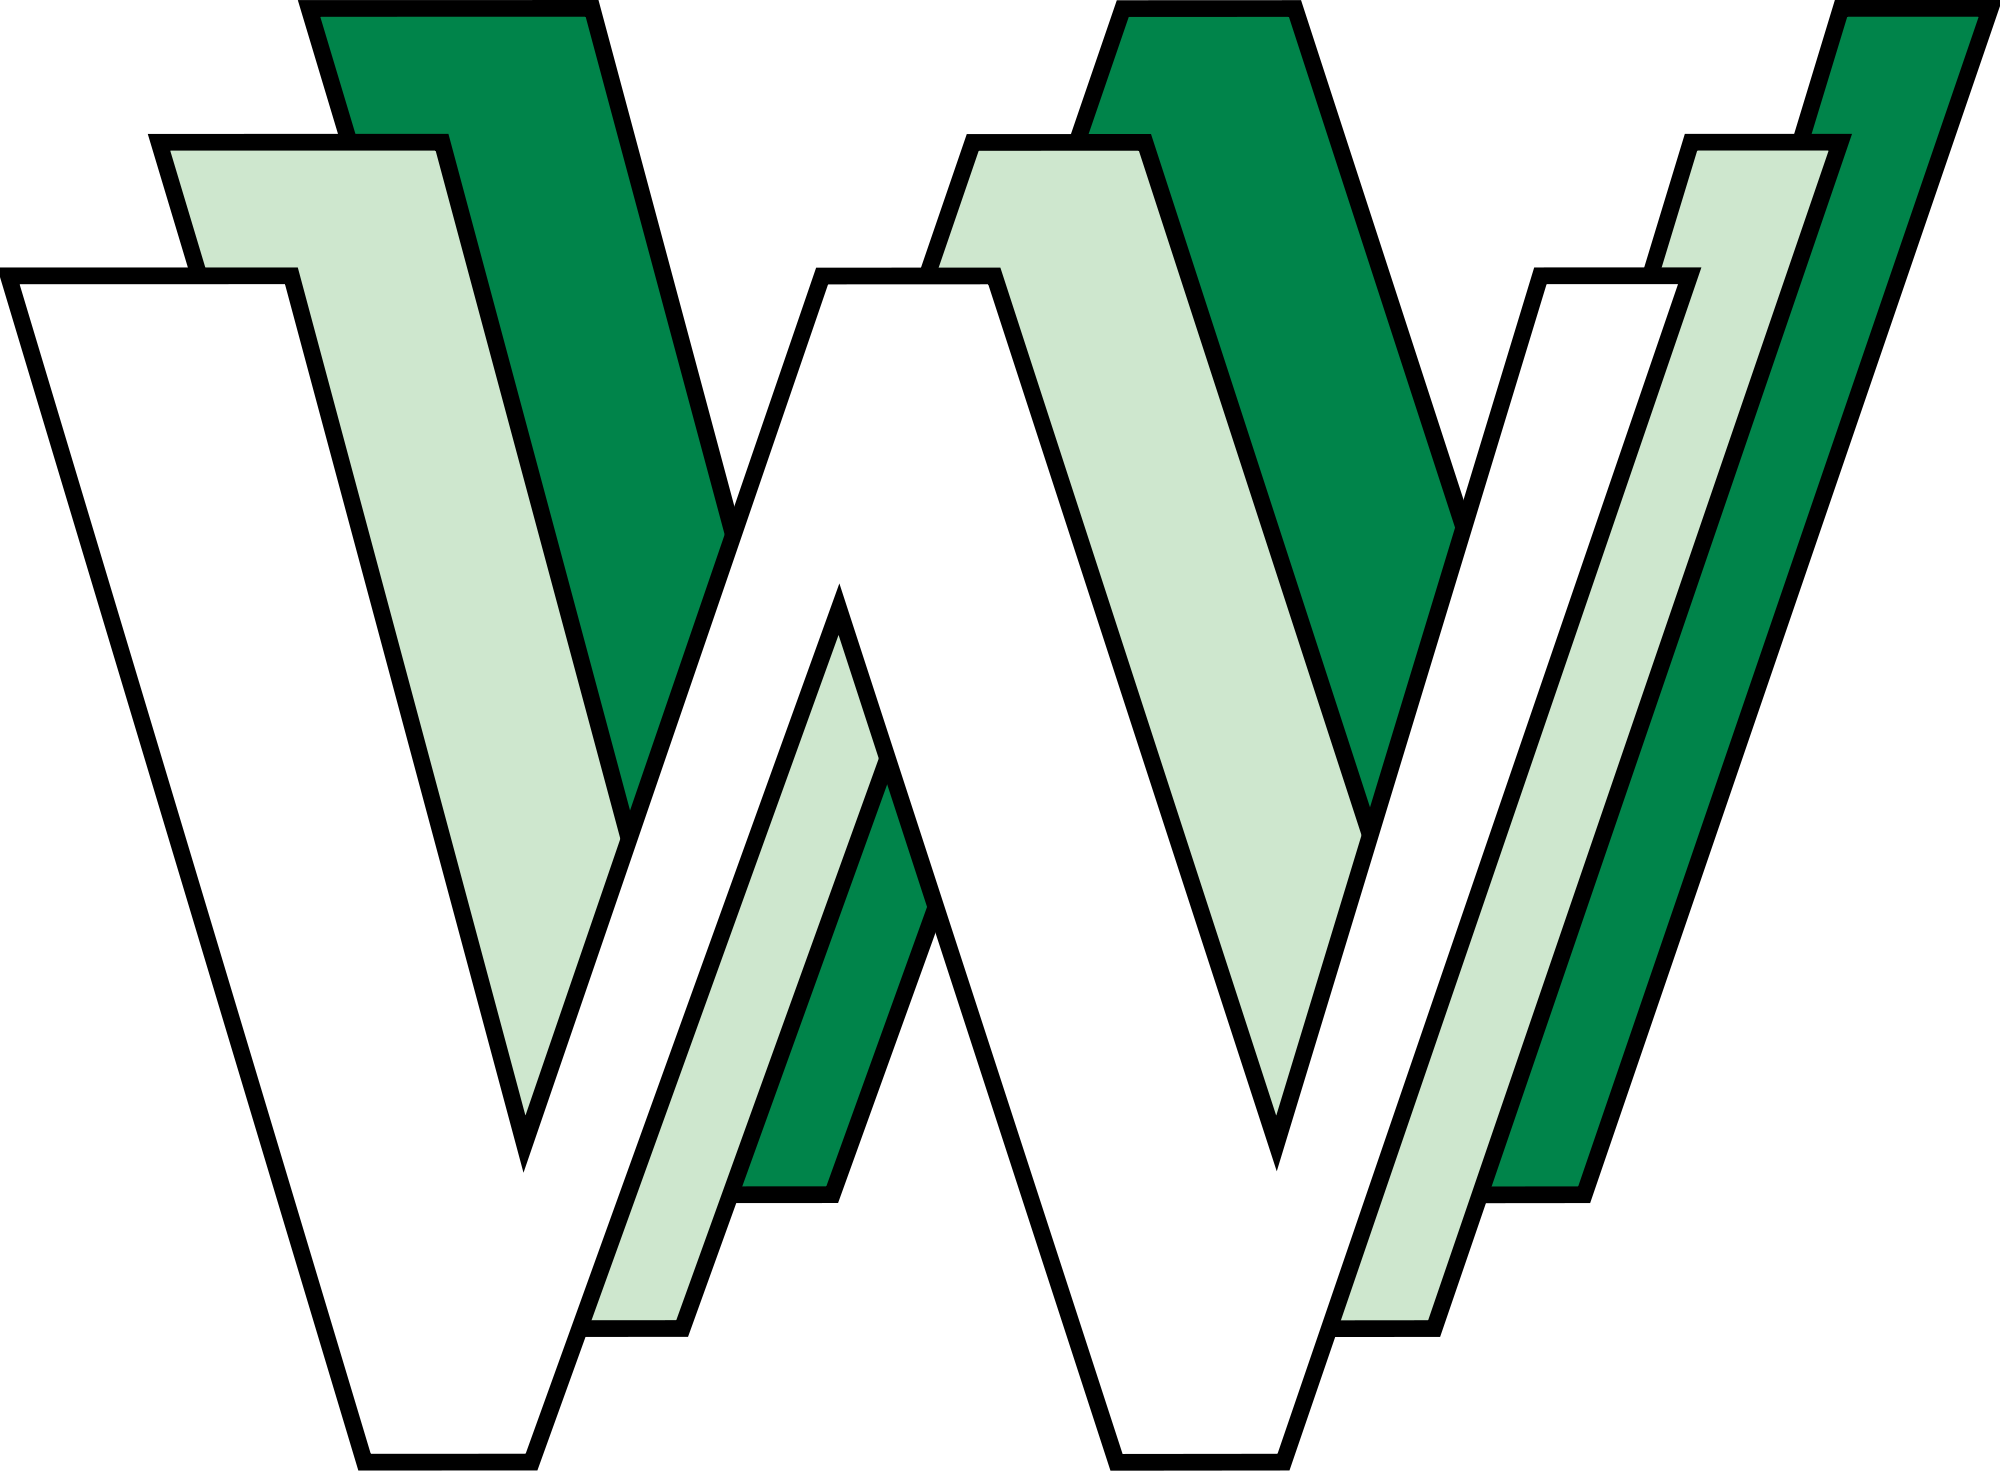 1991, birth of World Wide Web, historical logo by Robert Cailliau